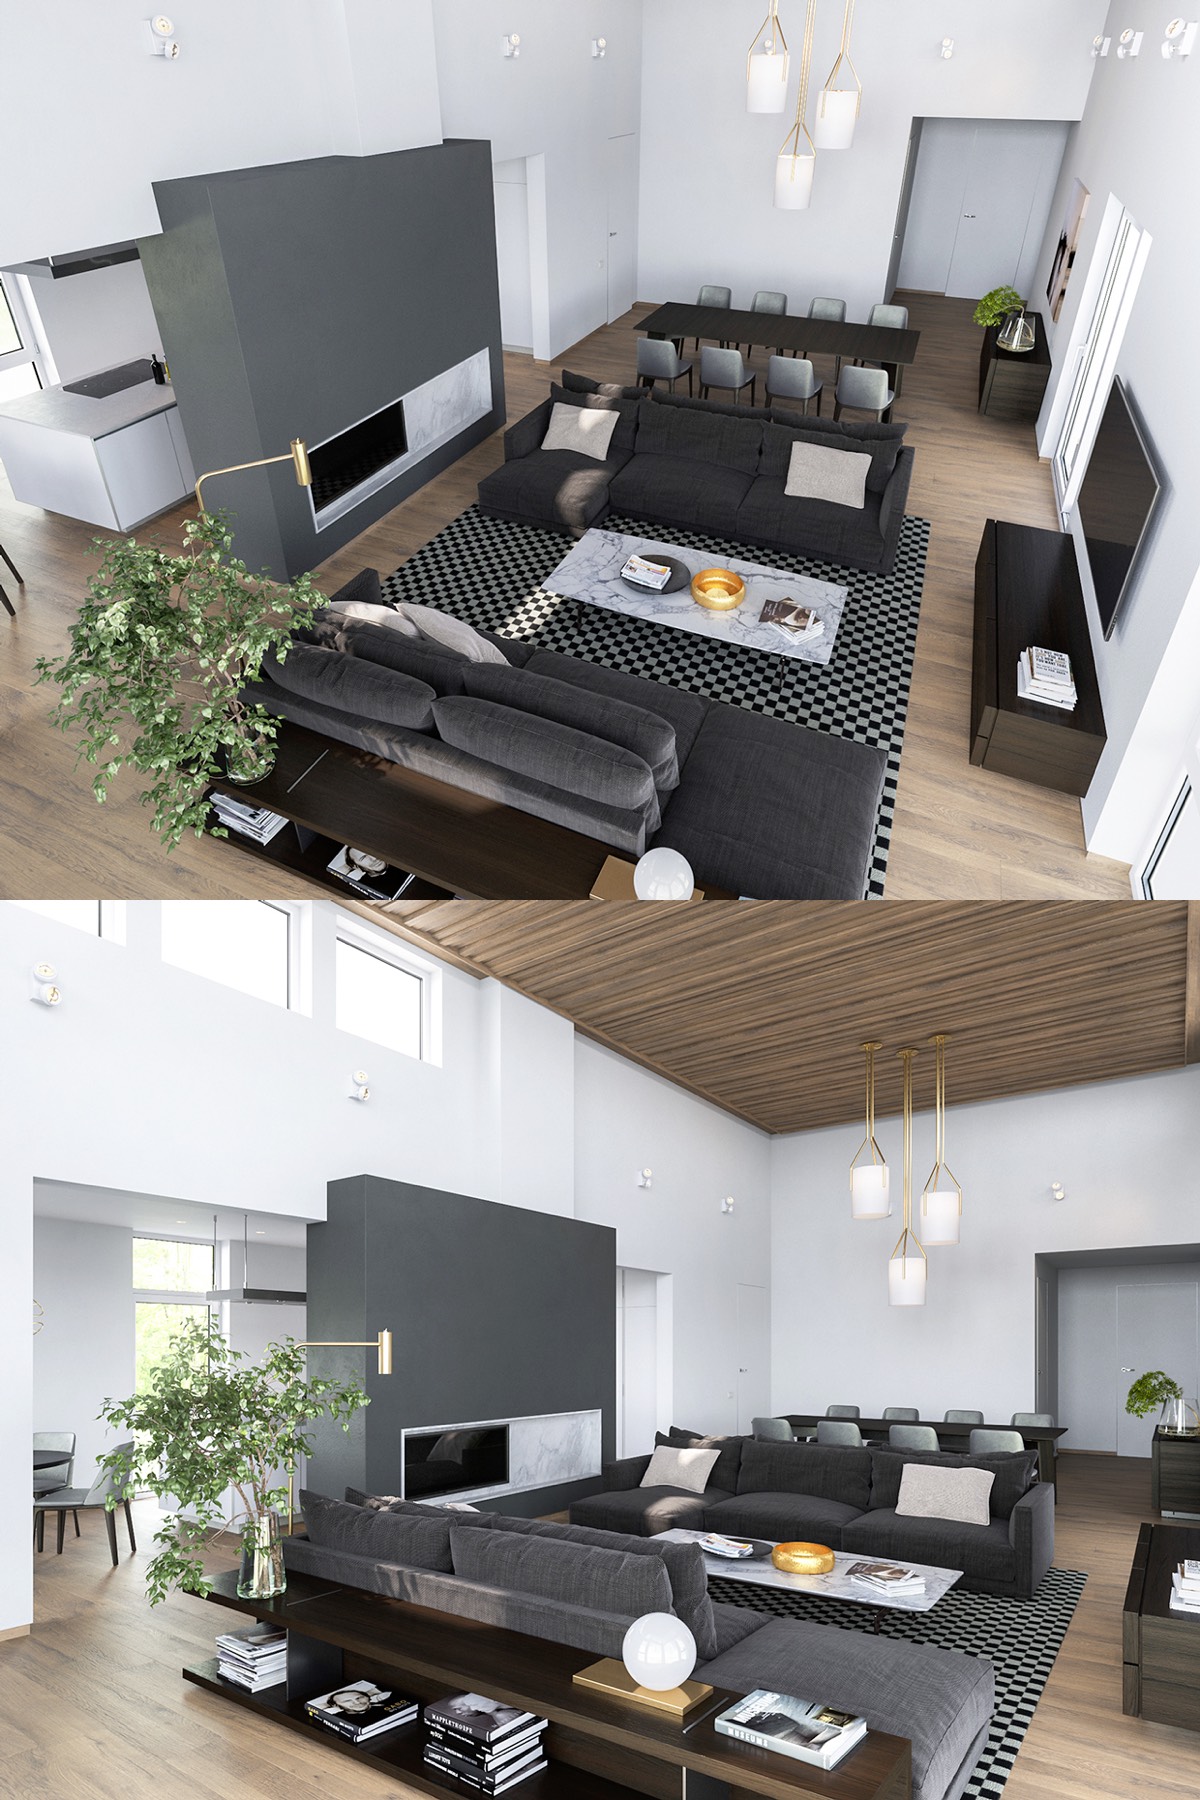 fantastic Scandinavian living room decor "width =" 1200 "height =" 1800 "srcset =" https://mileray.com/wp-content/uploads/2020/05/1588515613_467_Creative-Ideas-To-Make-Luxury-Living-Room-Designs-More-Remarkable.jpg 1200w, https: // myfashionos. com / wp-content / uploads / 2016/10 / Sergey-Baskakov-200x300.jpg 200w, https://mileray.com/wp-content/uploads/2016/10/Sergey-Baskakov-768x1152.jpg 768w, https: //mileray.com/wp-content/uploads/2016/10/Sergey-Baskakov-683x1024.jpg 683w, https://mileray.com/wp-content/uploads/2016/10/Sergey-Baskakov-696x1044.jpg 696w, https://mileray.com/wp-content/uploads/2016/10/Sergey-Baskakov-1068x1602.jpg 1068w, https://mileray.com/wp-content/uploads/2016/10/Sergey-Baskakov -280x420.jpg 280w "sizes =" (maximum width: 1200px) 100vw, 1200px